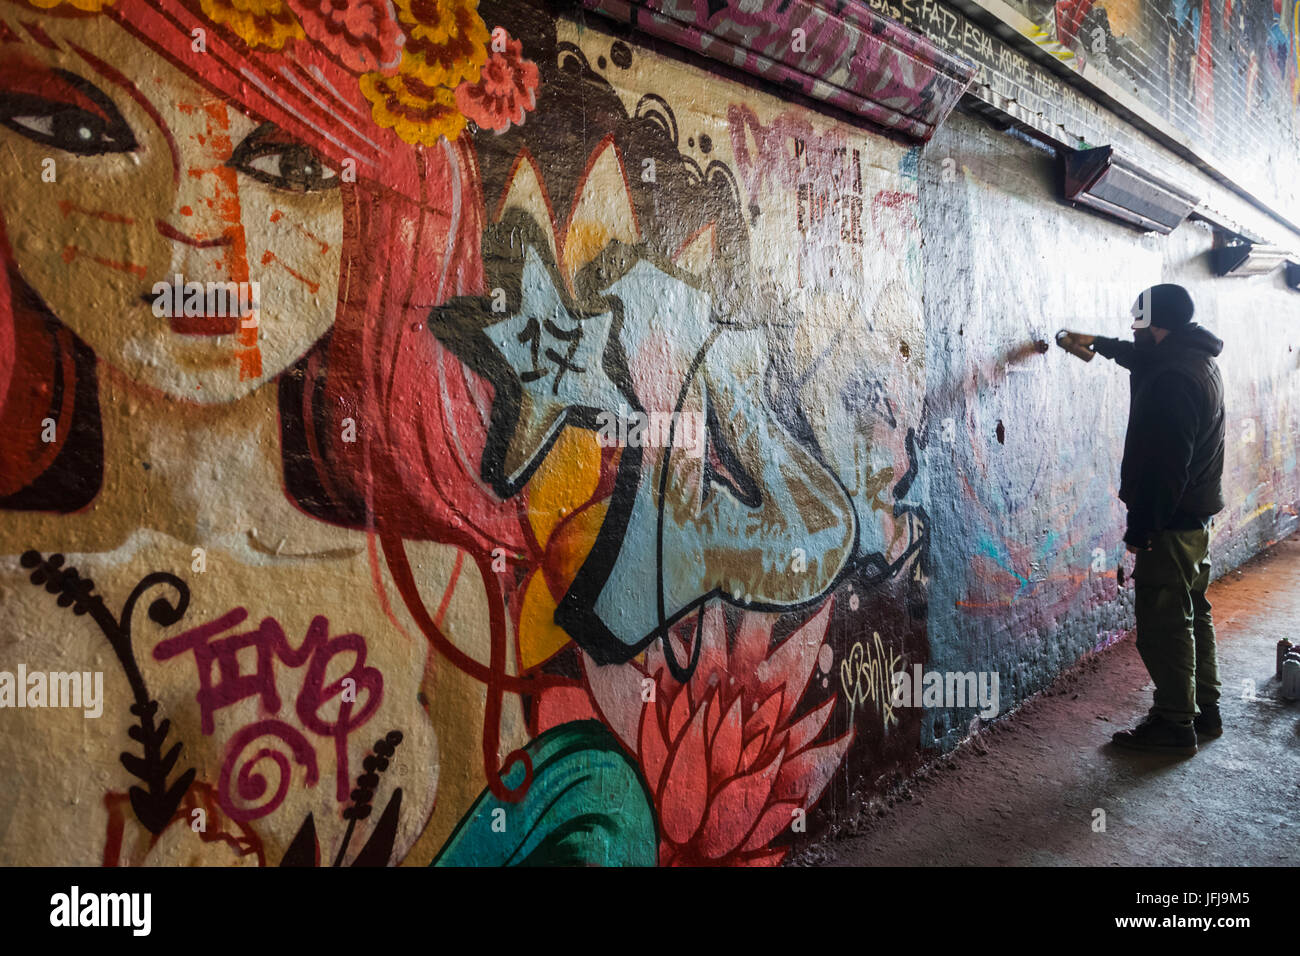 England, London, Lambeth, Waterloo, Leake Street, Graffiti und Wand Kunst Tunnel, Graffiti-Künstler bei der Arbeit Stockfoto